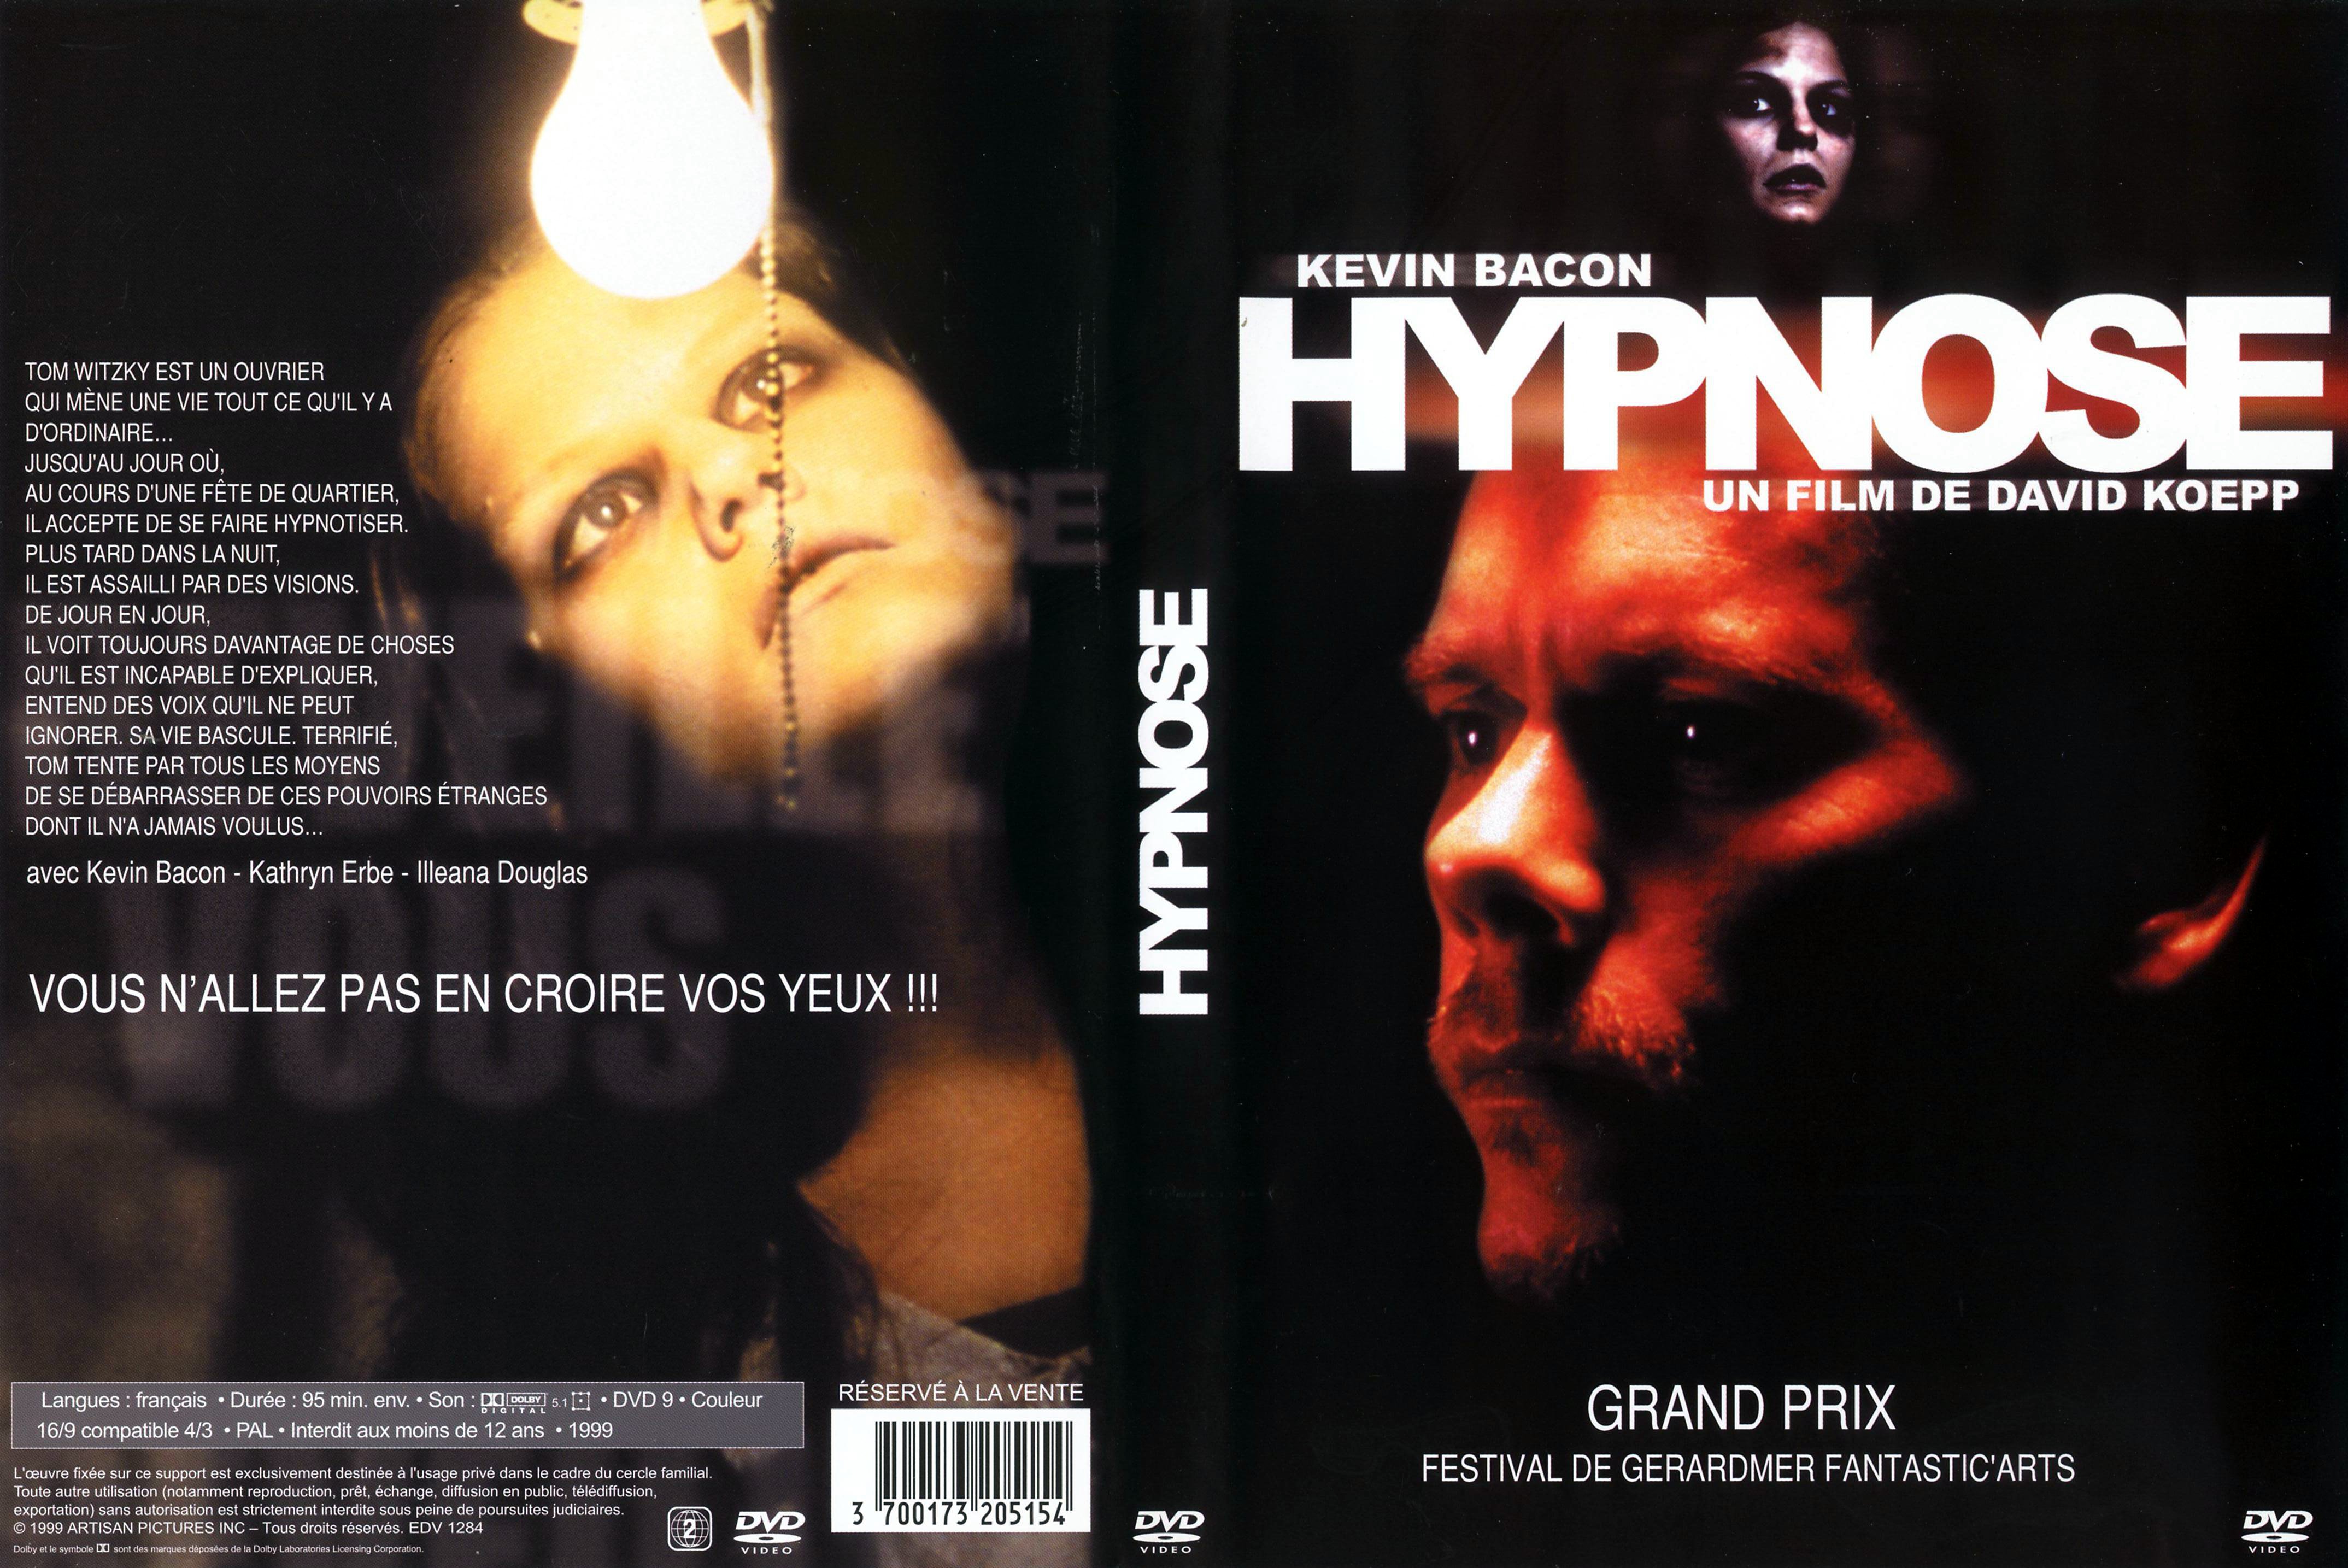 Jaquette DVD Hypnose v2